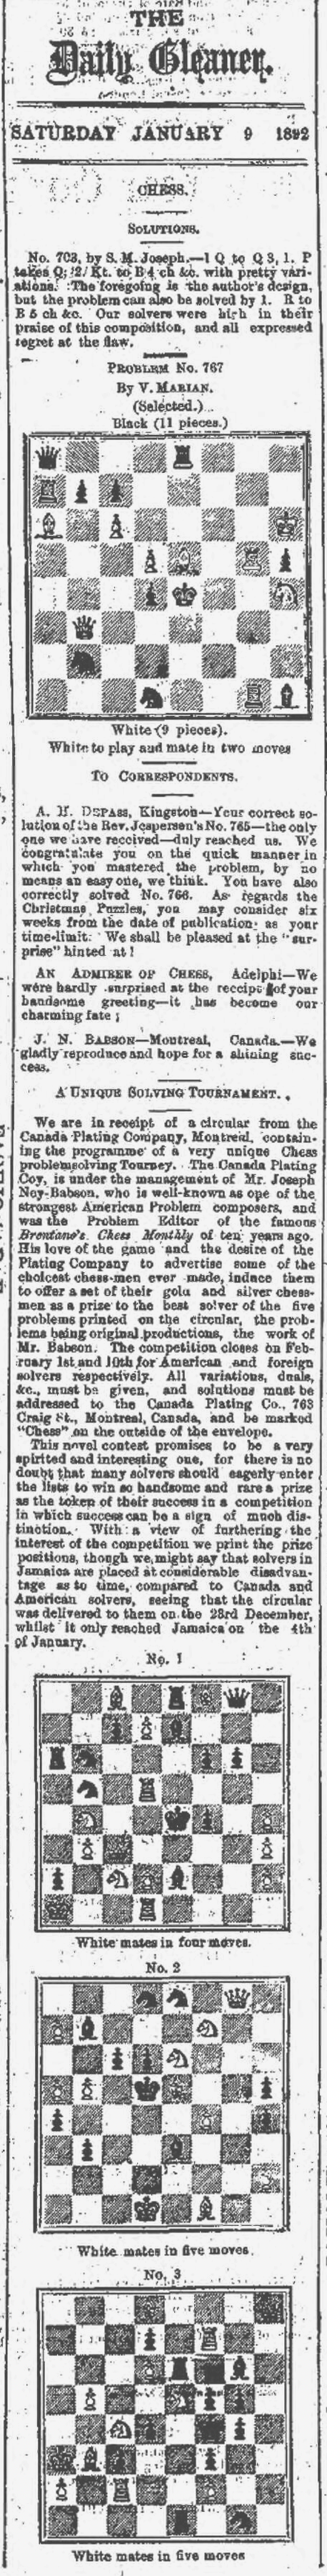 1892.01.09-01 Kingston Daily Gleaner.png